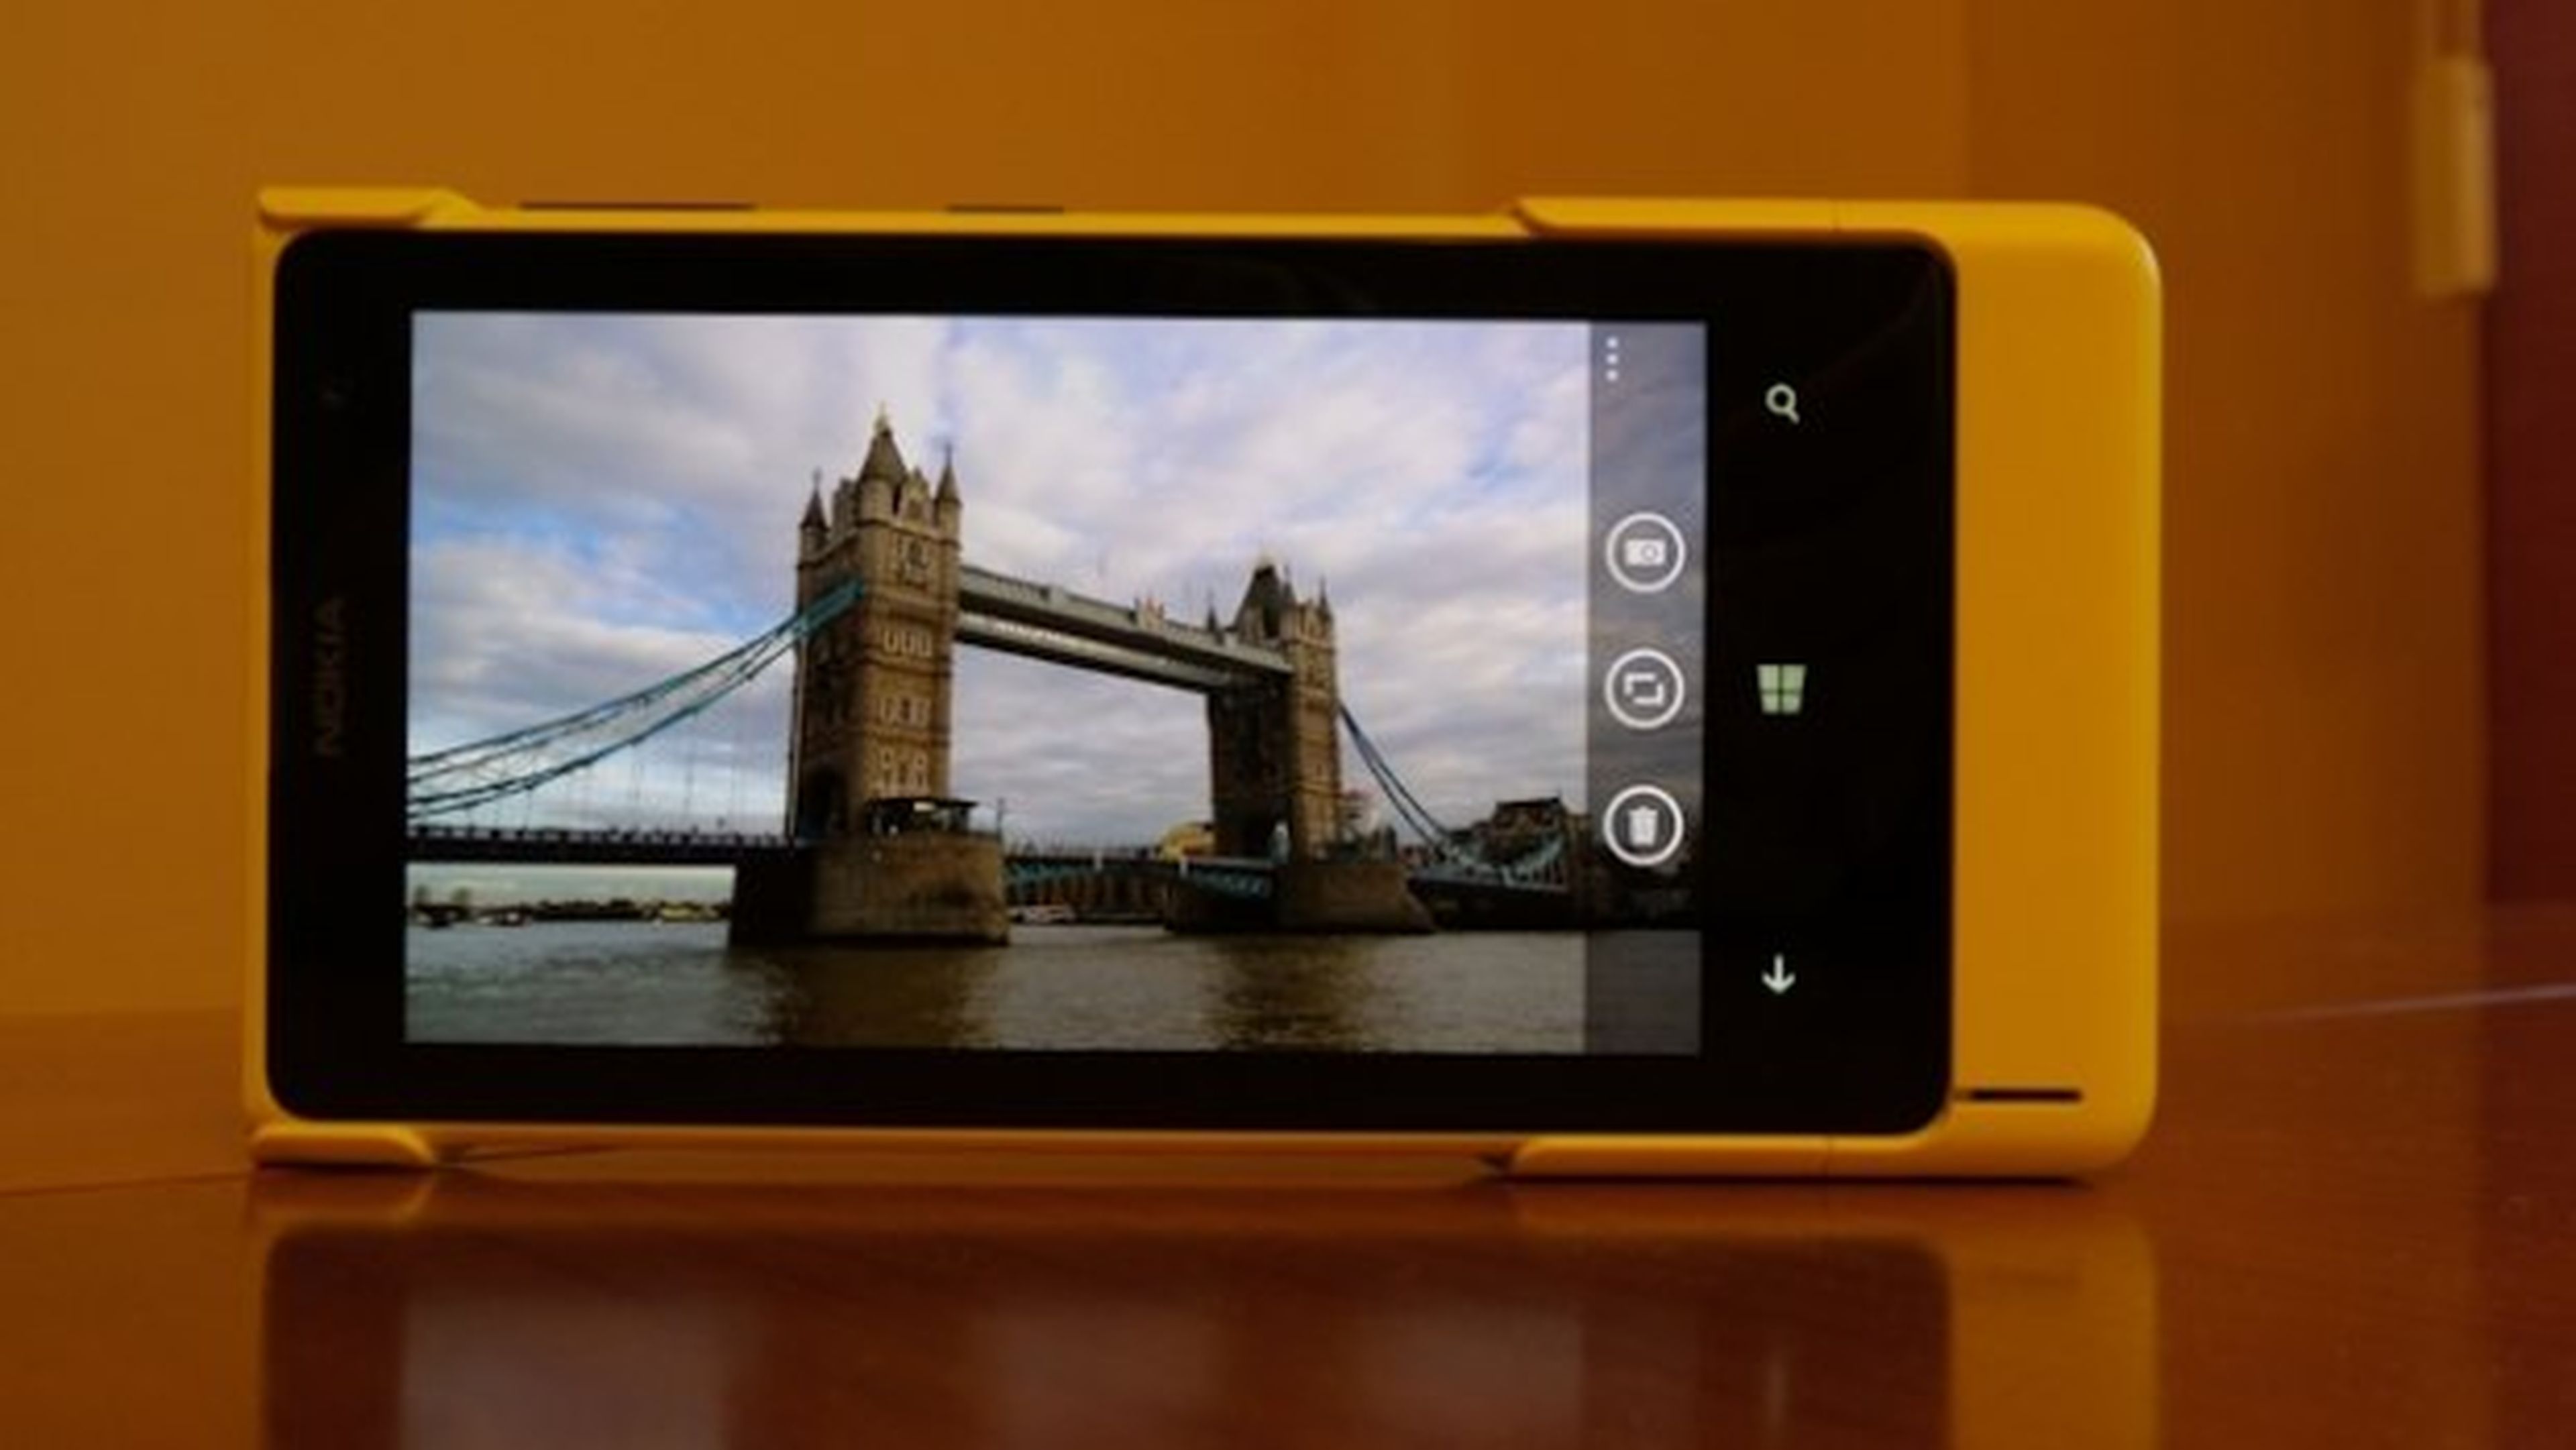 Nokia Lumia 1020. Camera Grip.